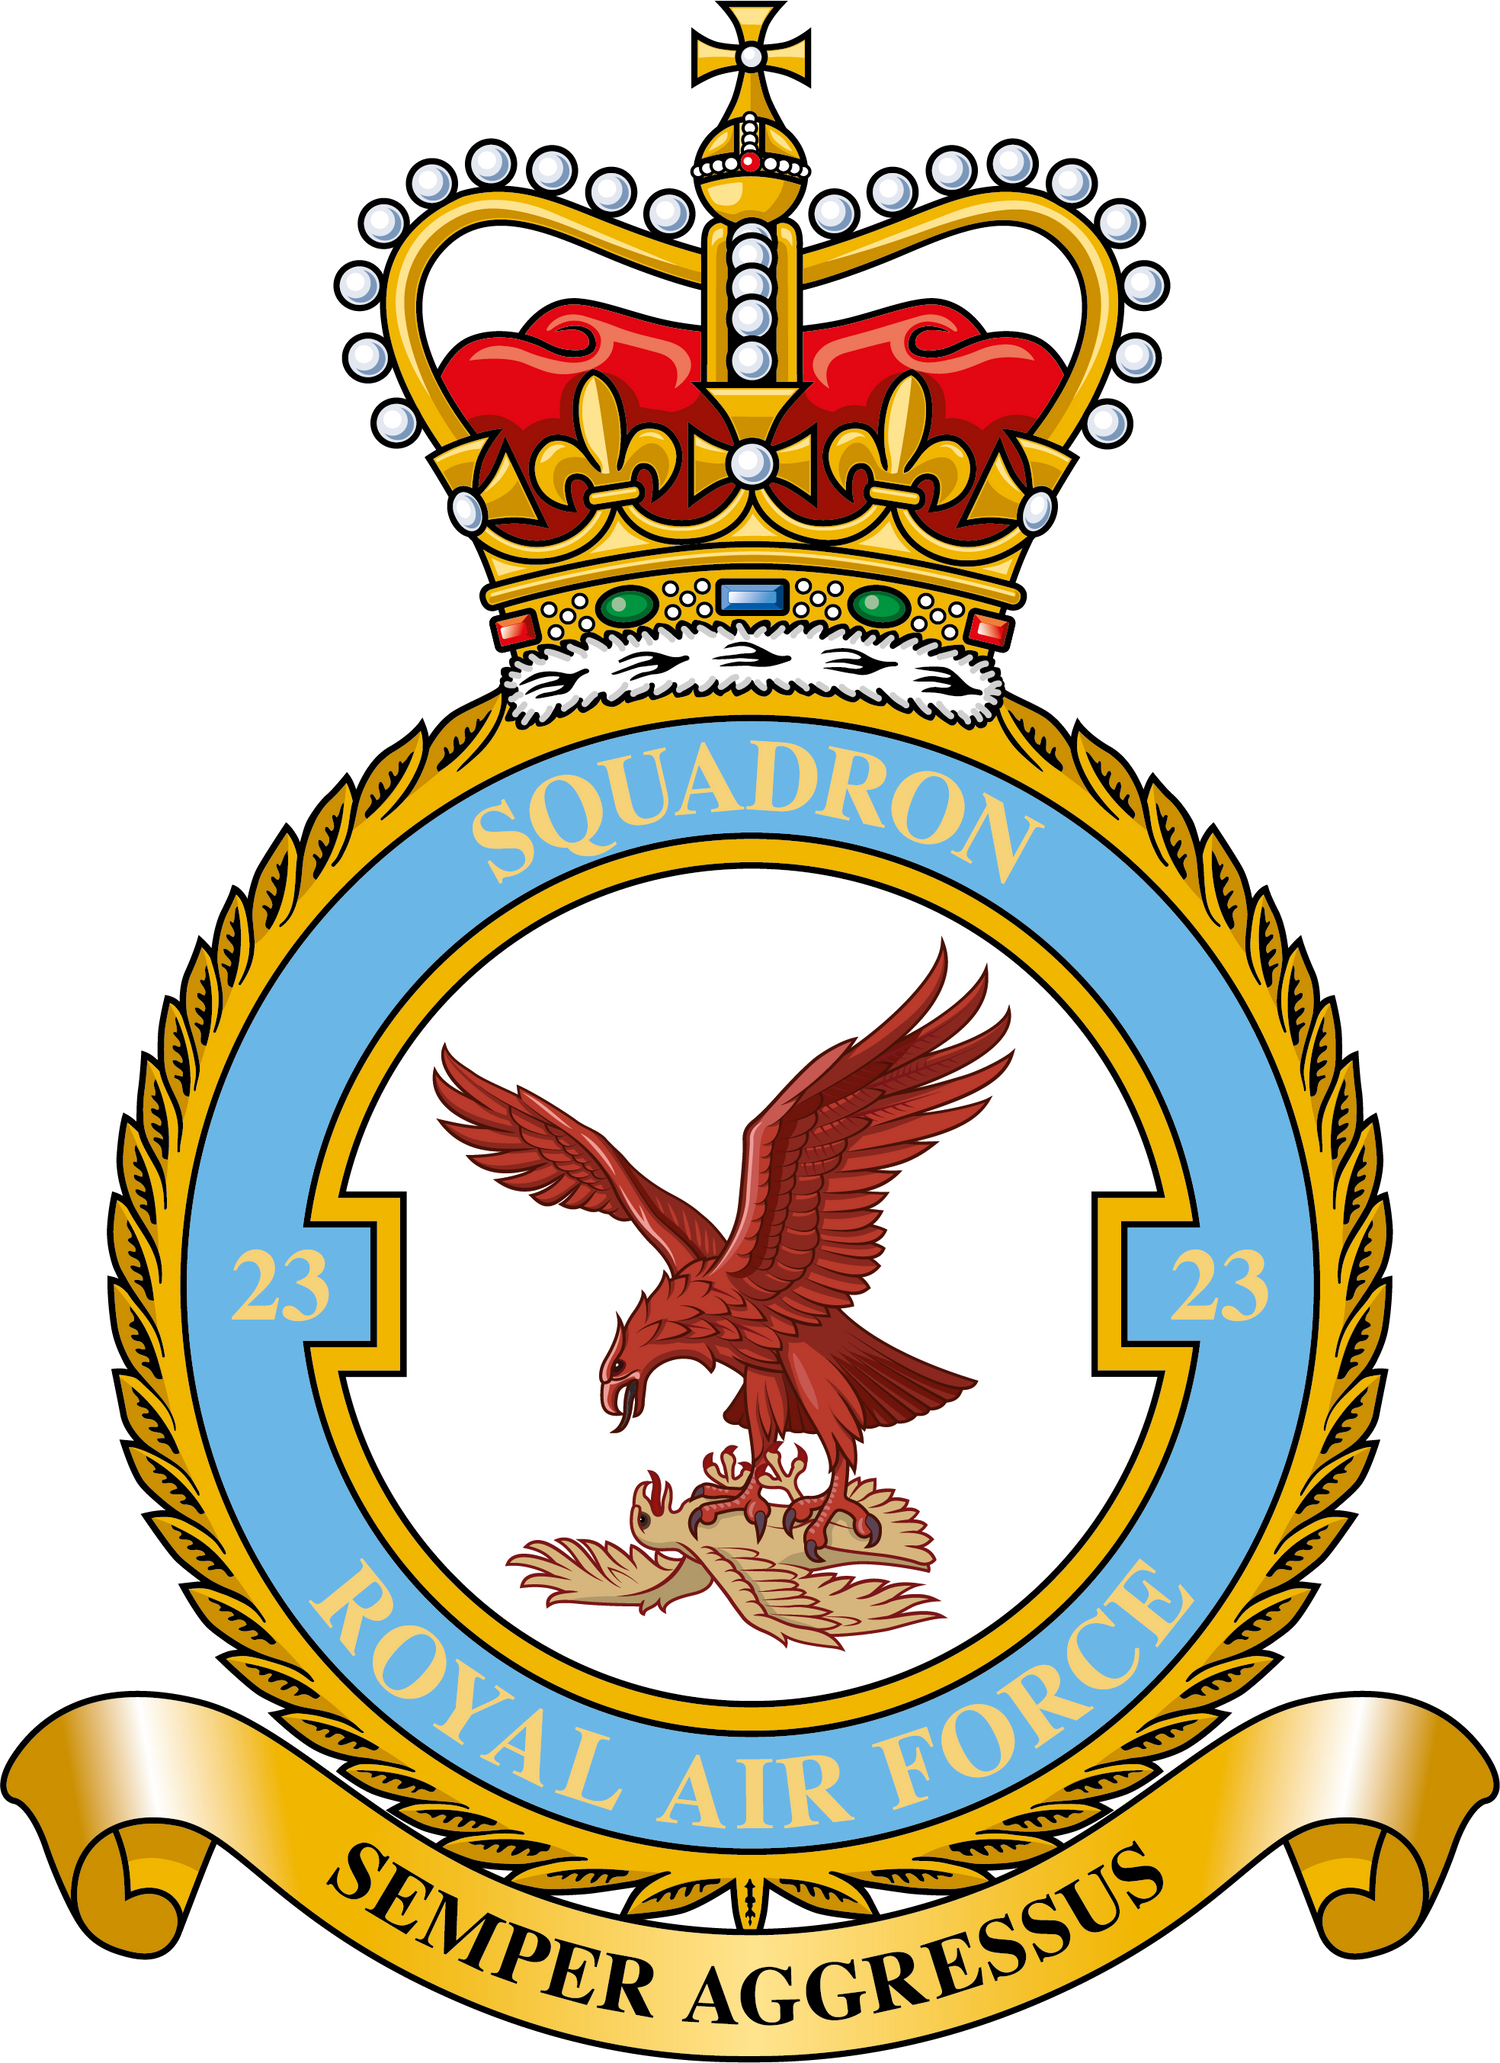 23 Squadron RAF